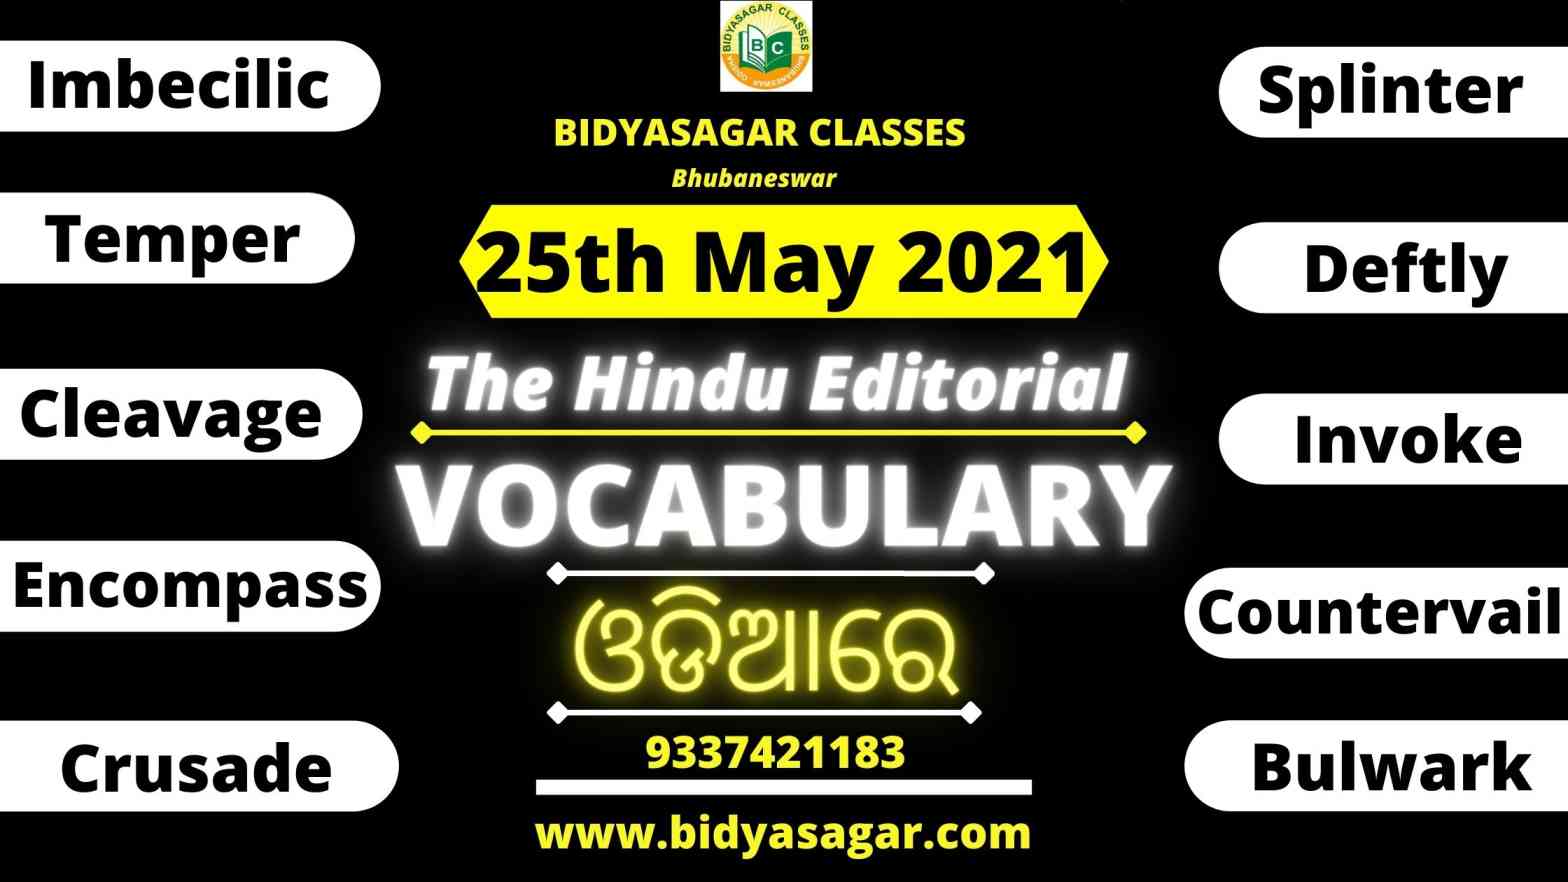 The Hindu Editorial Vocabulary of 25th May 2021